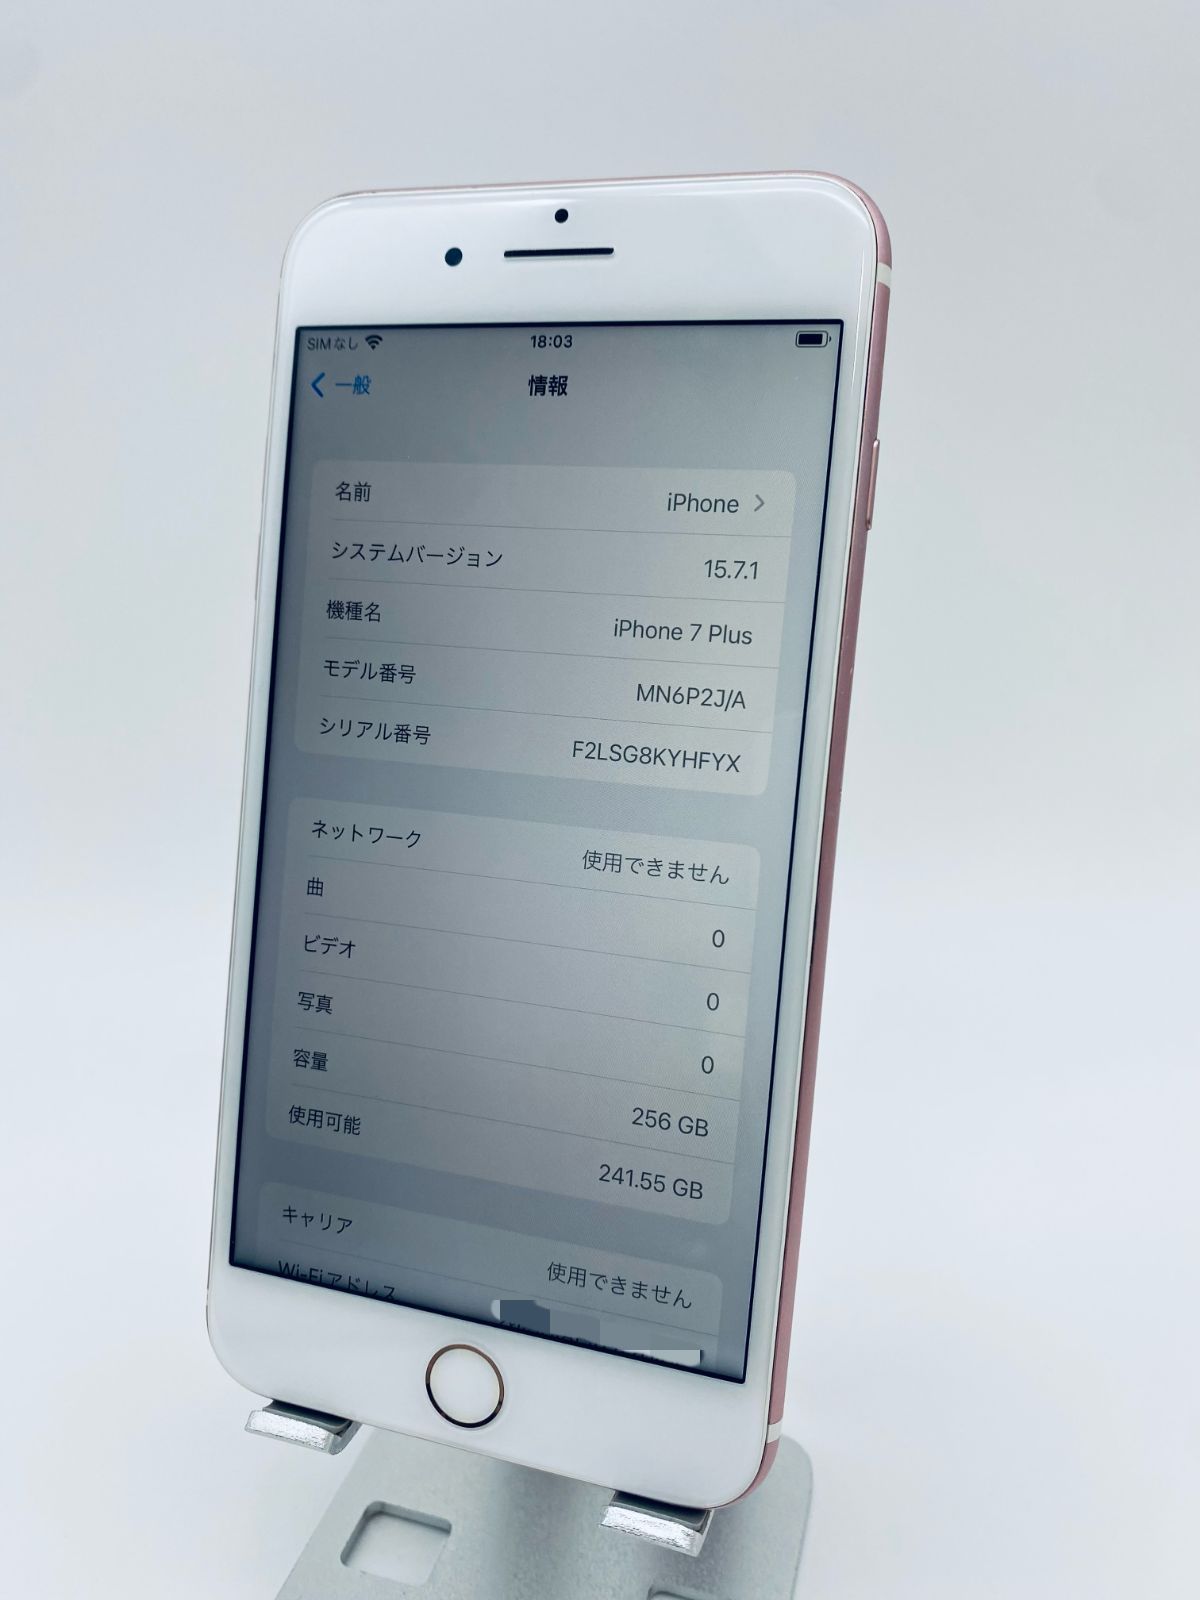 iPhone 7Plus 256G ローズGD/シムフリー/大容量新品BT 07